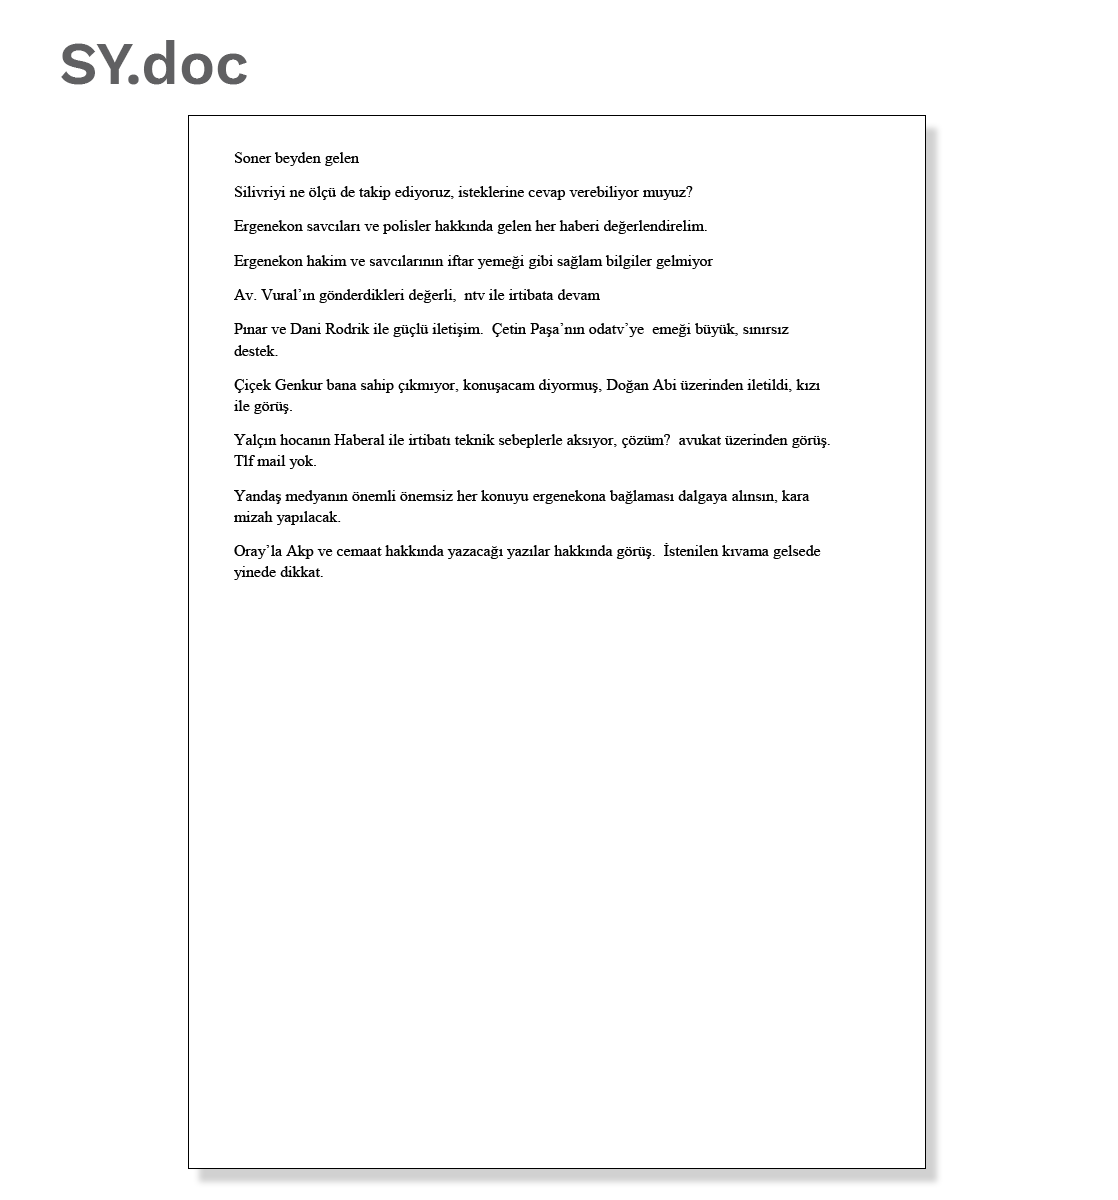 Document 7: SY.doc